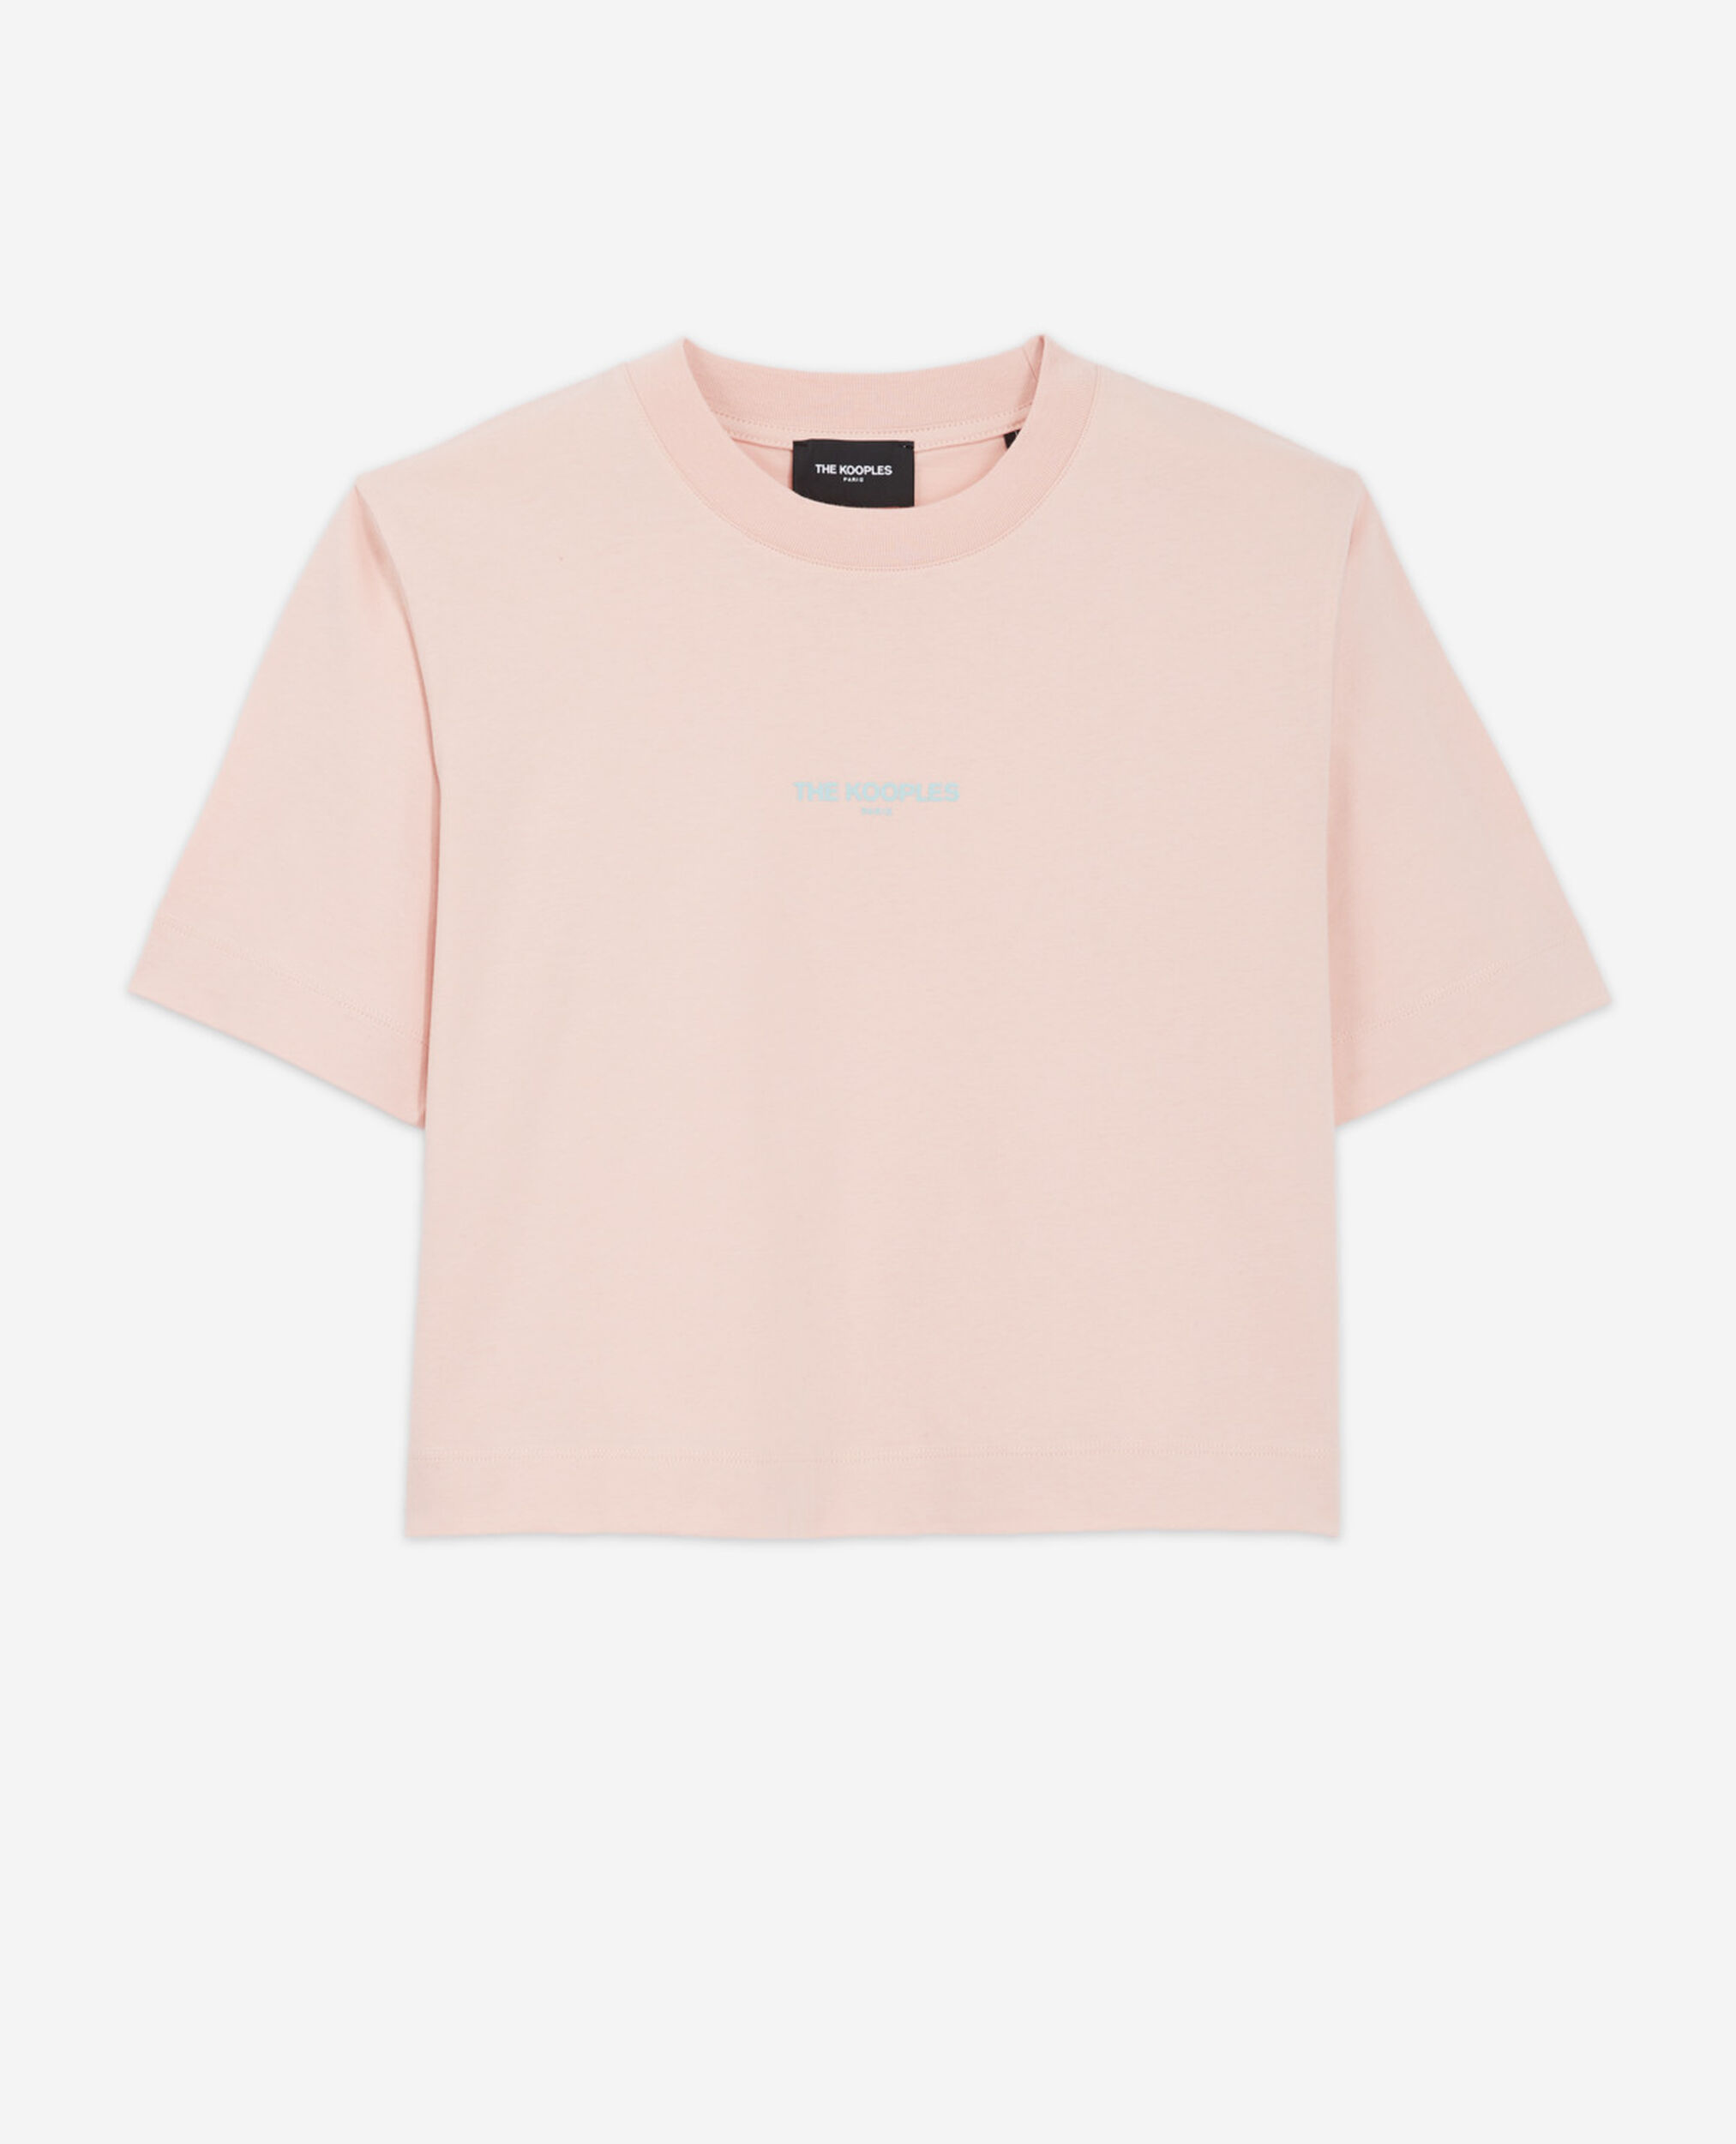 T-shirt coton rose manches courtes logo, PINK, hi-res image number null